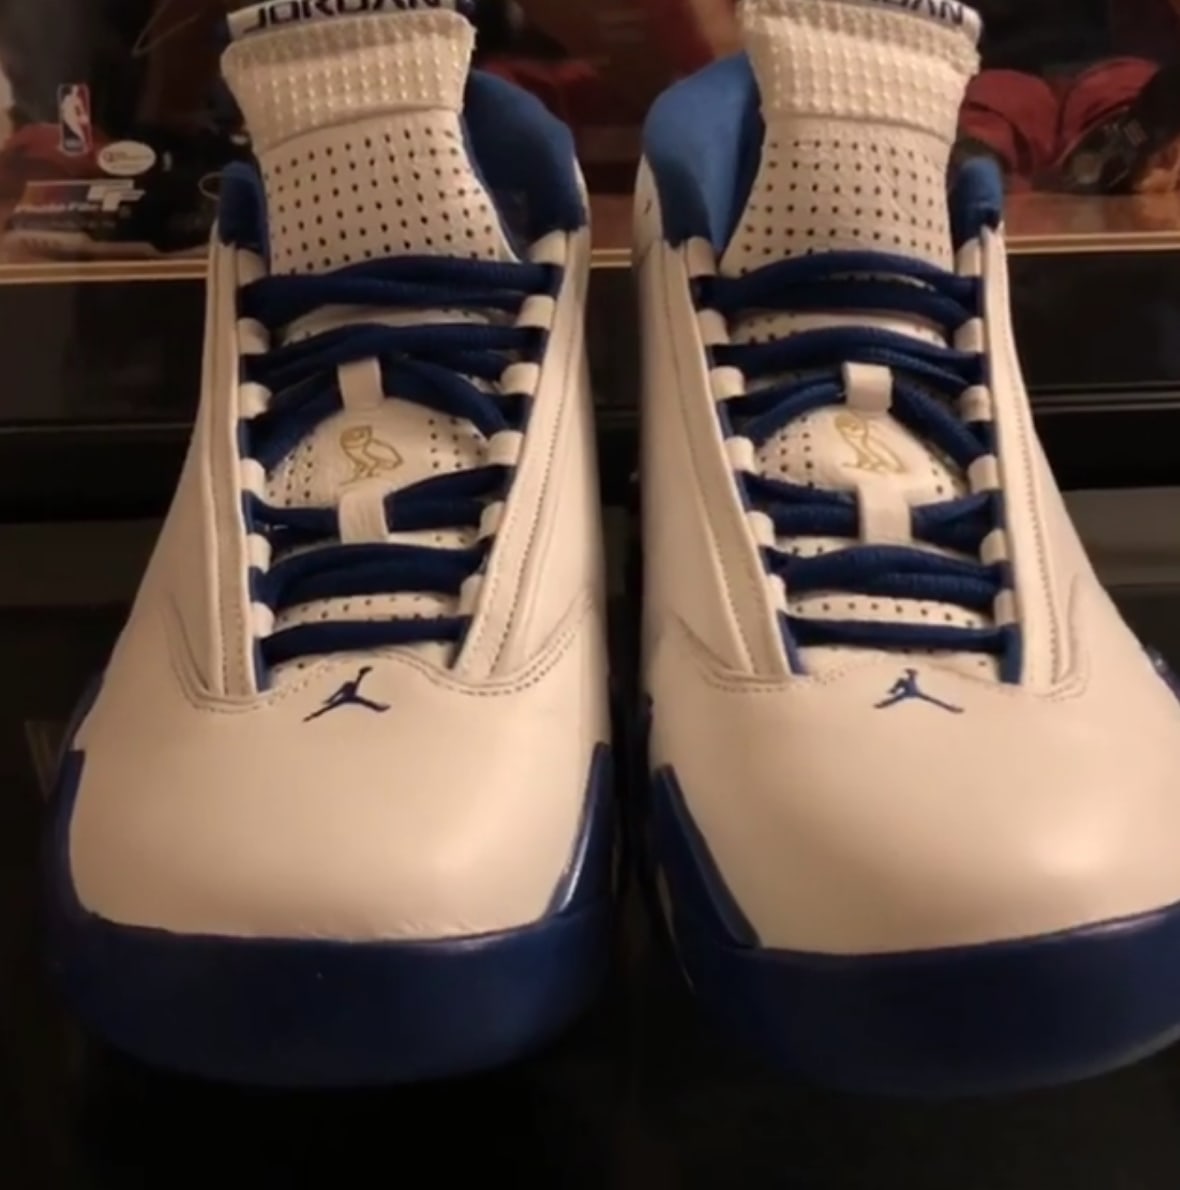 Drake OVO x Air Jordan 14 'Kentucky Wildcats' Exclusive Sneakers | Sole ...